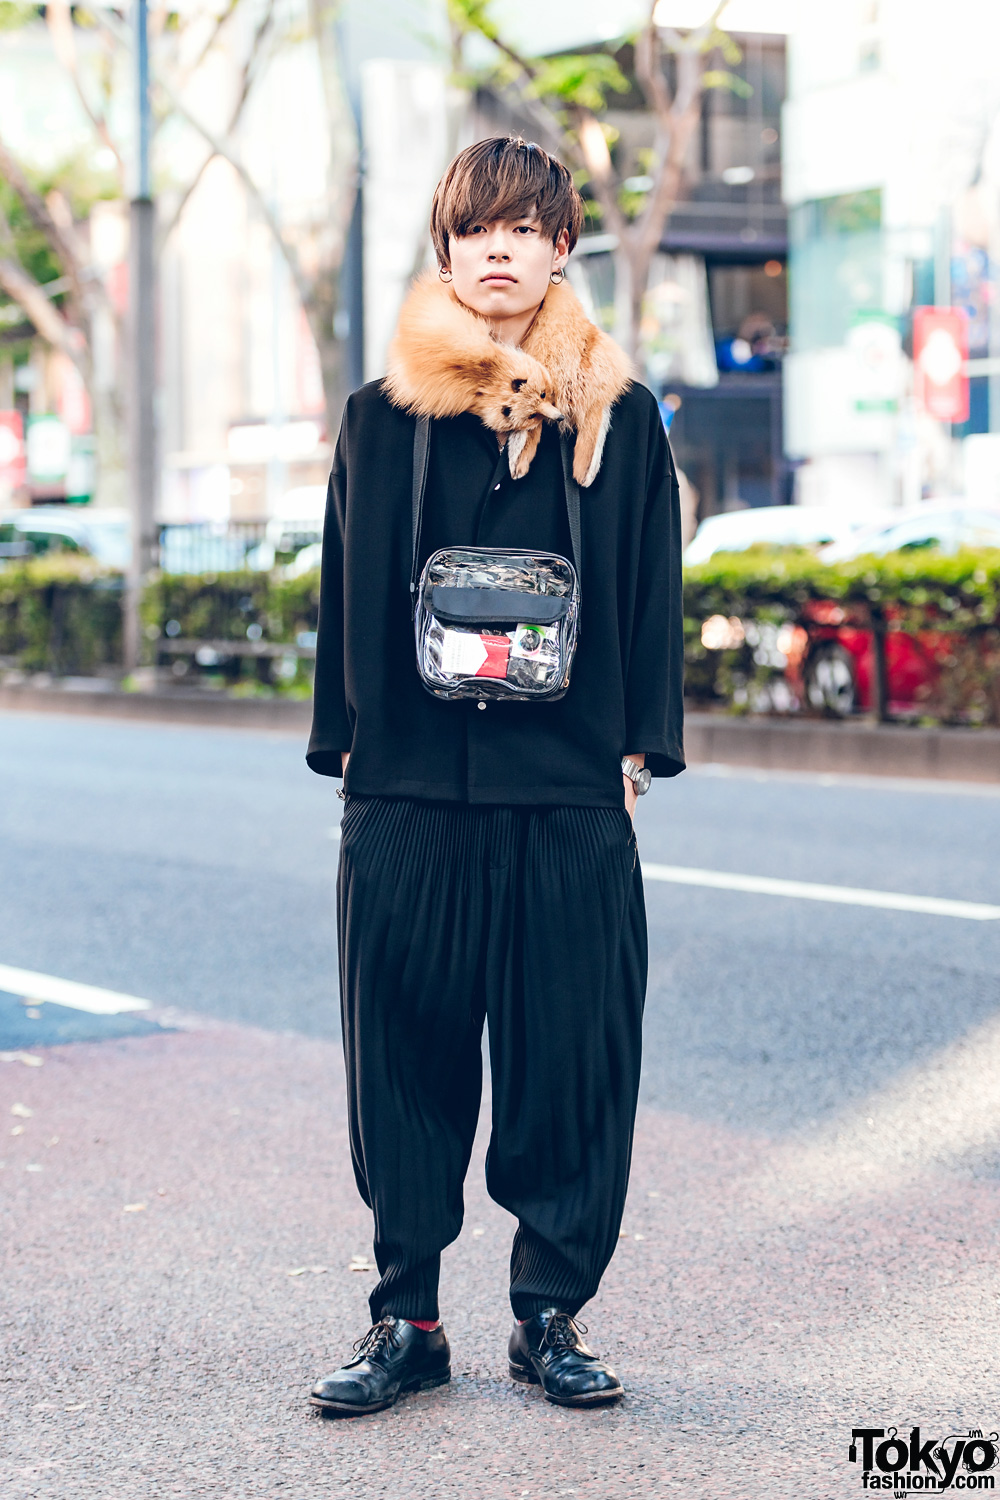 Japanese Model in Black Street Fashion w/ Studious, Issey Miyake, An Old Joke & Chrome Hearts